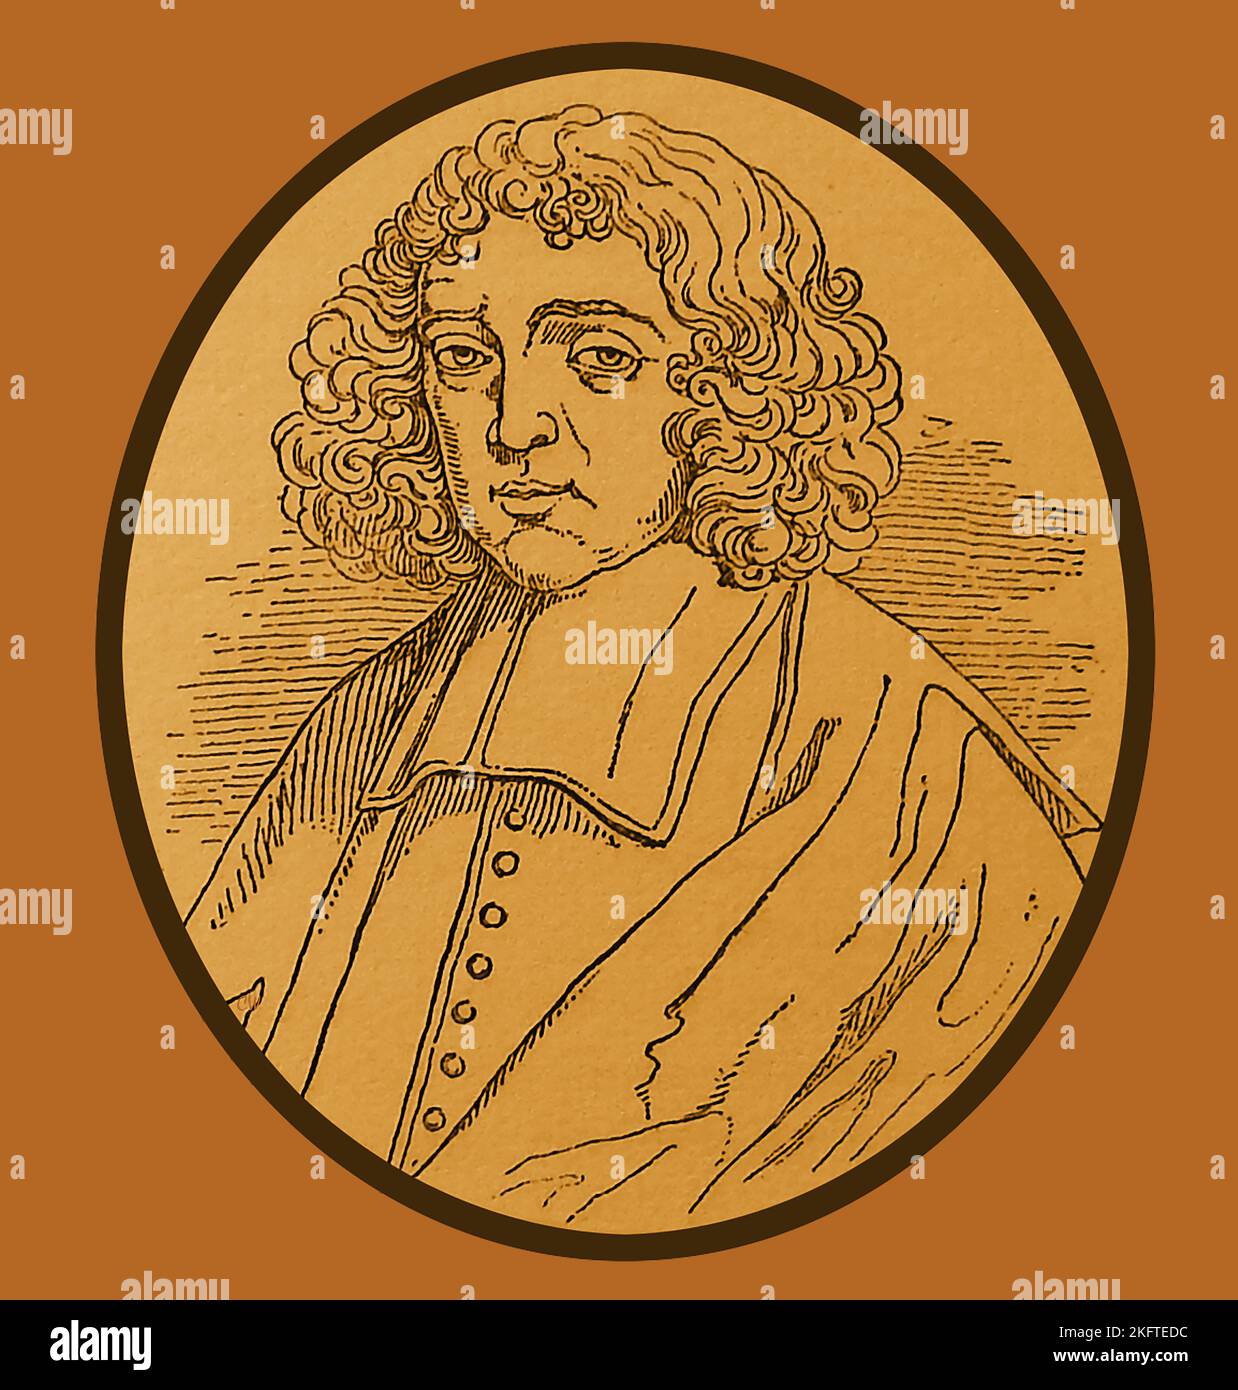 Ritratto inciso alla fine del 19th di Benedetto de Spinoza, 1632 – 1677 . (Bento de Espinosa) ma conosciuto anche come Baruch Spinoza e Benedictus de Spinoza. Era un filosofo di origine portoghese, nato ad Amsterdam. --- een laat 19e eeuws gegraveerd portret van Benedictus de Spinoza, 1632 – 1677. (Geboren ALS Bento de Espinosa) maar ook bekend al Baruch Spinoza en Benedictus de Spinoza. Hij era een filosoof van Portugese afkomst, geboren in Amsterdam. -- um retrato gravado no final do século XIX de Bento de Spinoza, 1632 - 1677 . -- ברוך שפינוזה Foto Stock